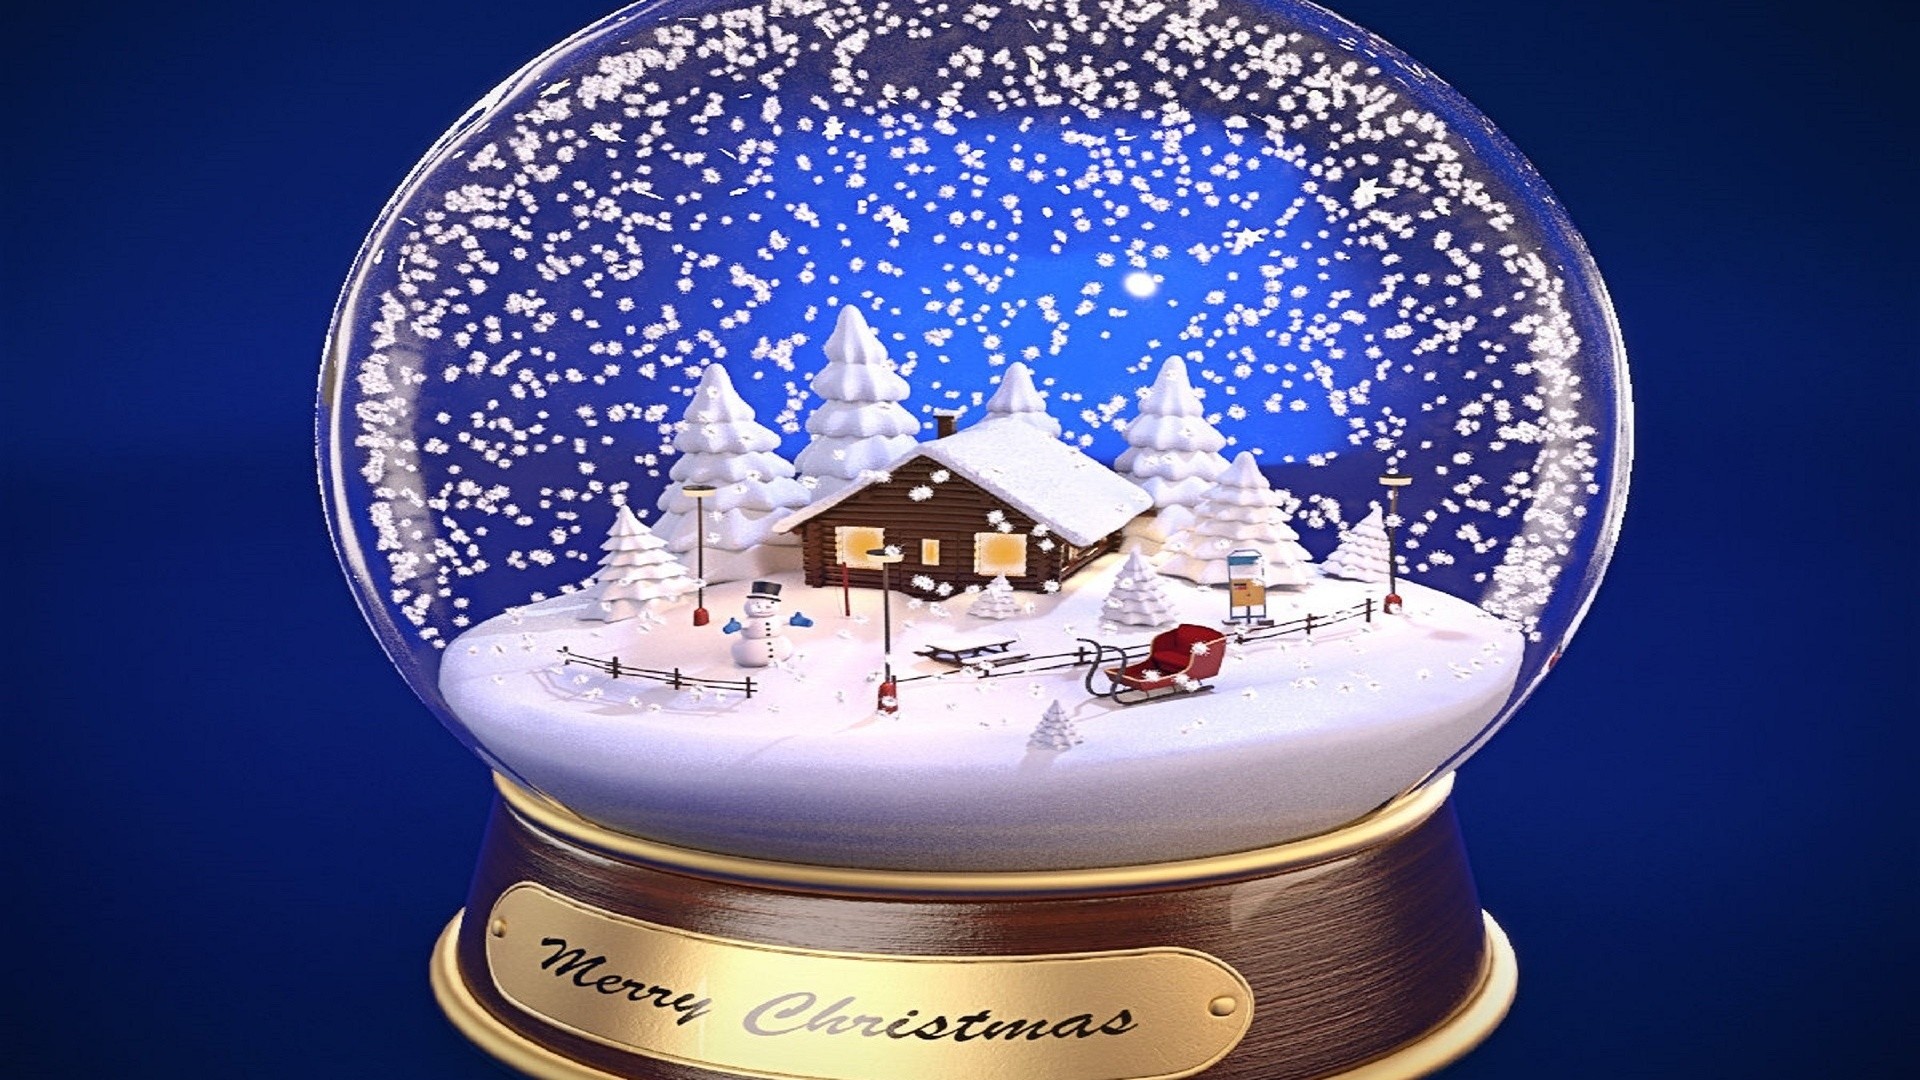 1920x1080 Christmas, Merry Christmas, Snow, Snowman, Winter, Snow Globe, Merry  Christmas